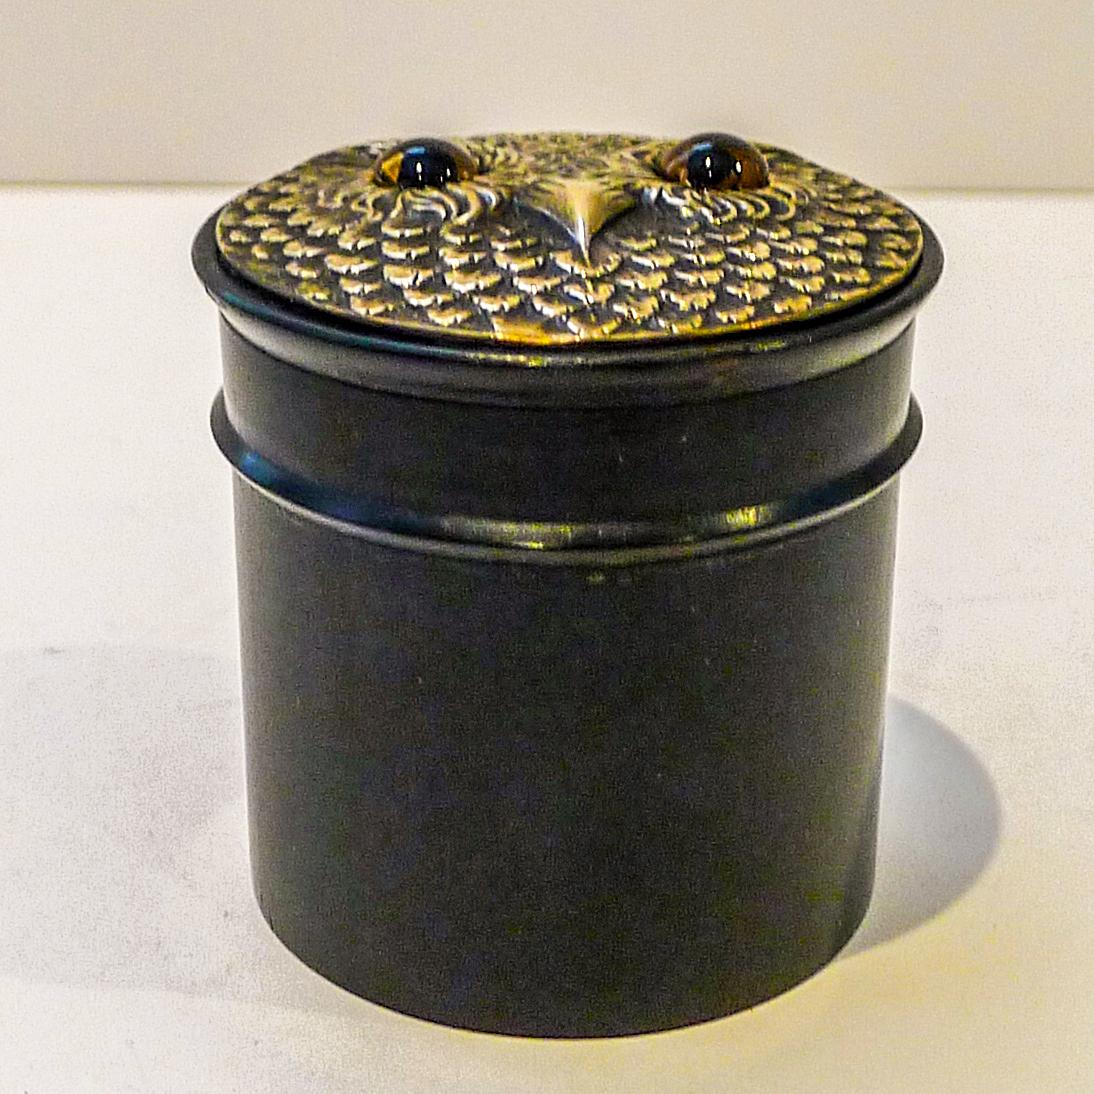 Late Victorian Antique English Ebony and Brass Owl Powder Box c.1900